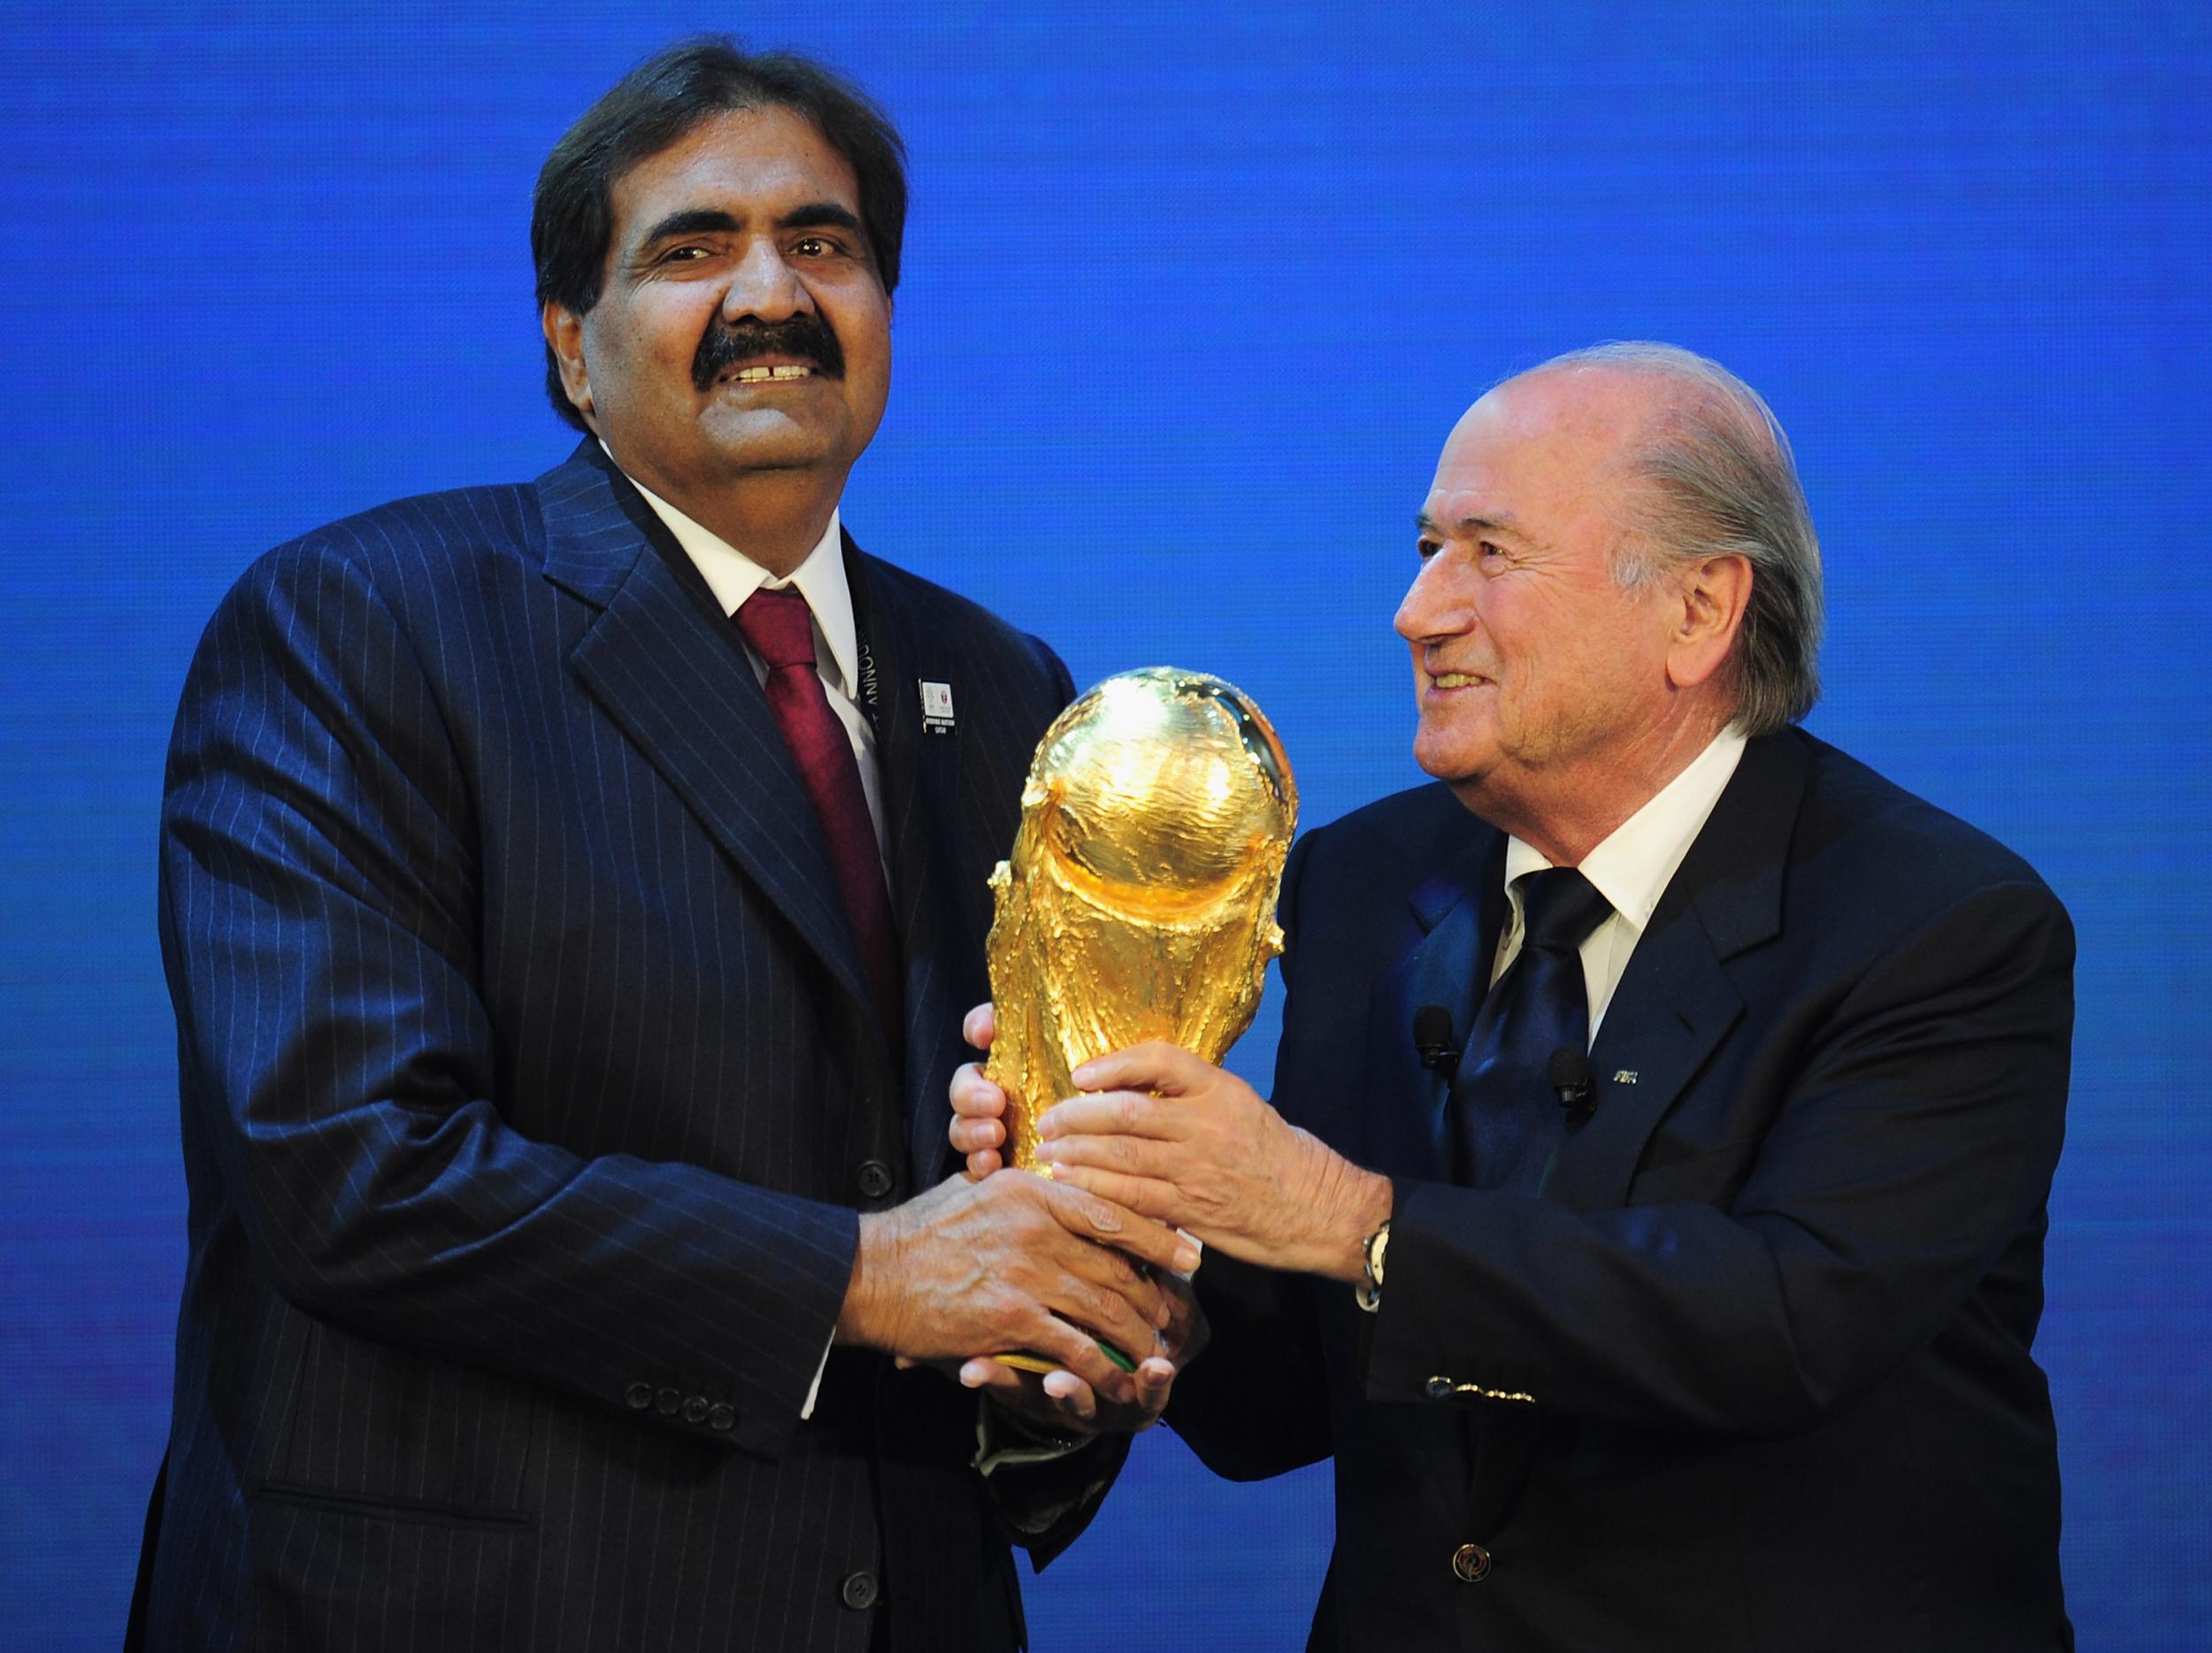 The FA were initially critical of Qatar's winning bid